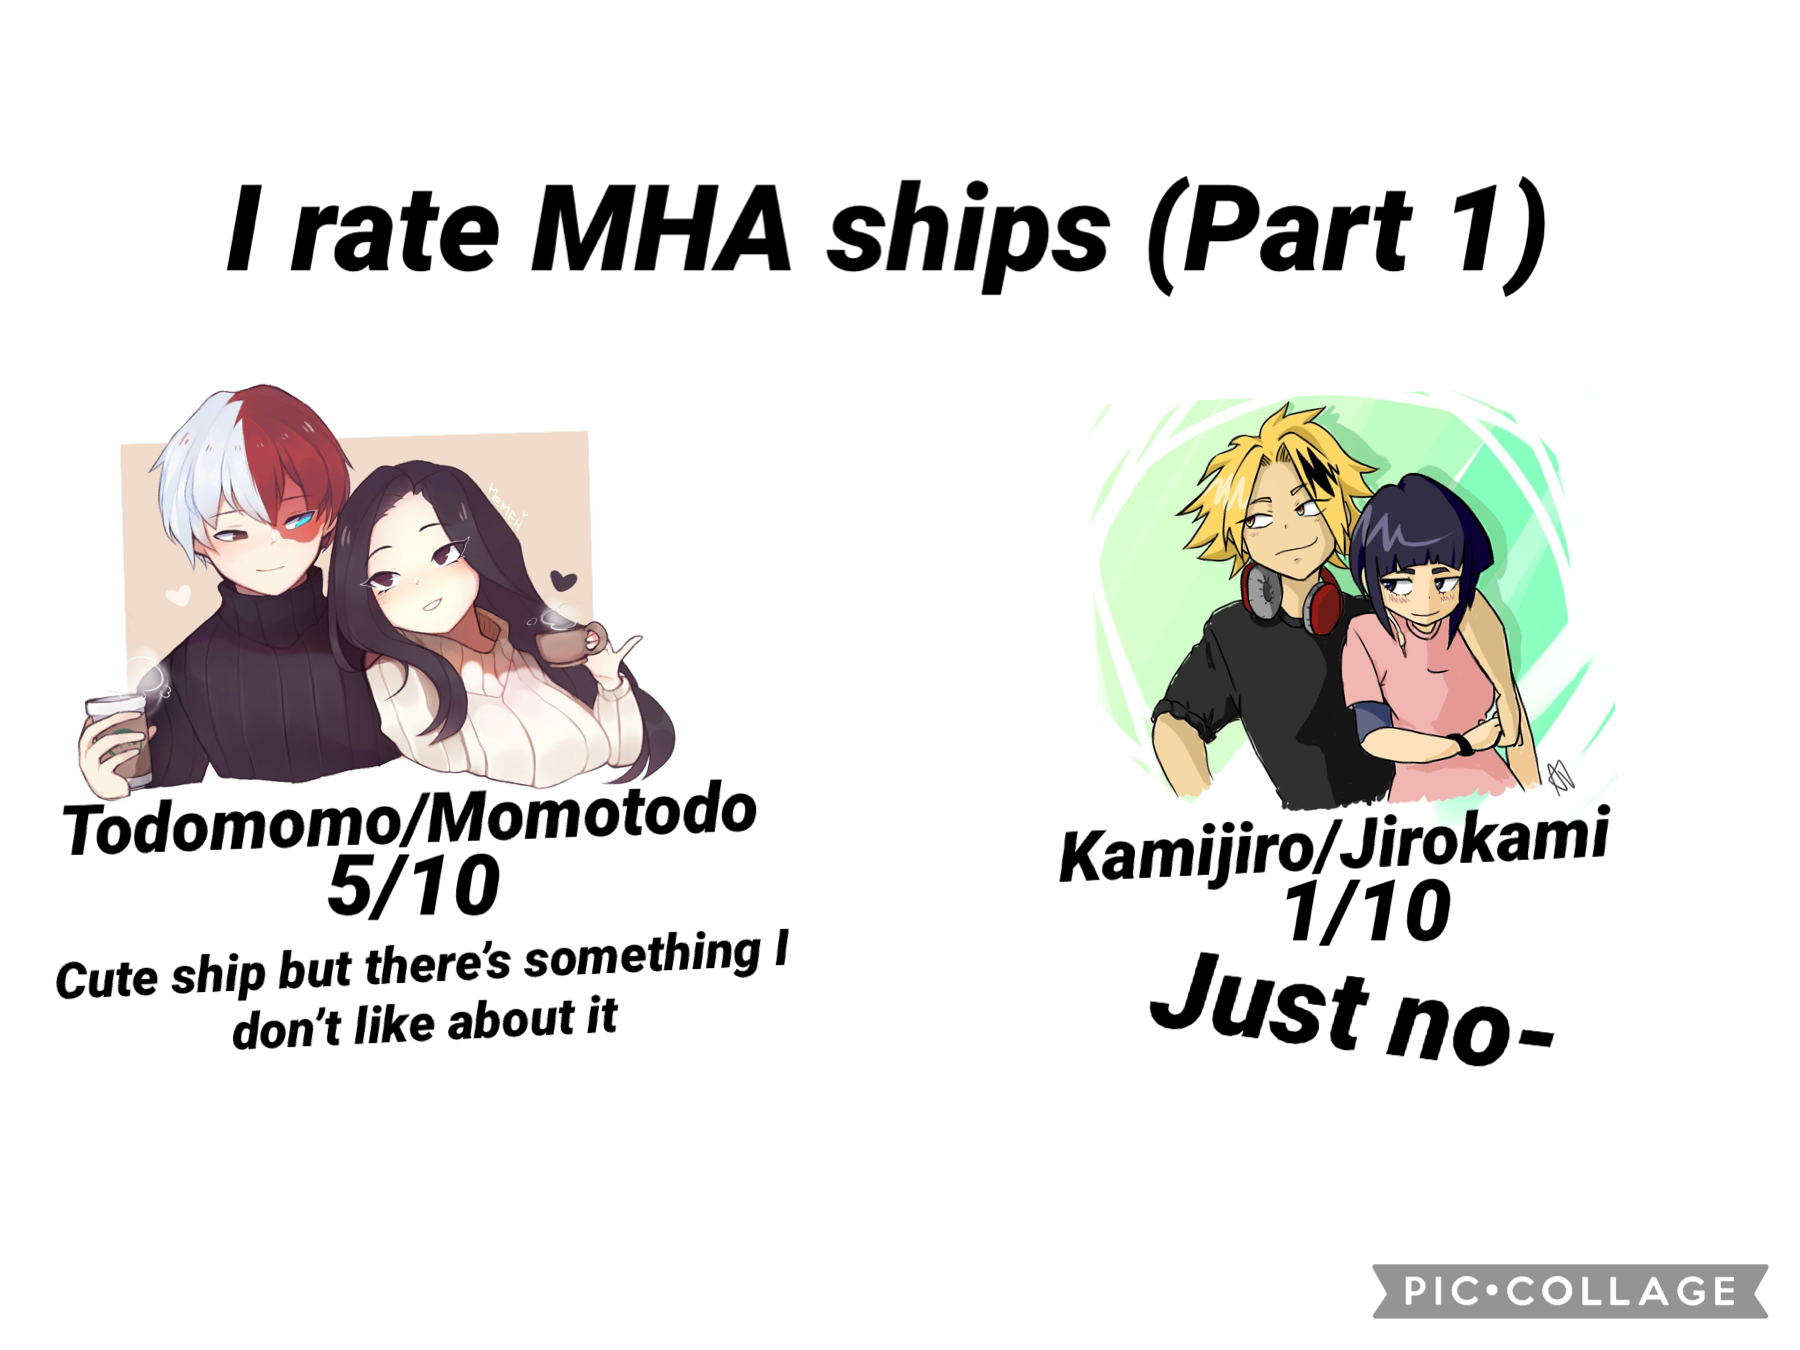 I rate MHA ships part 1